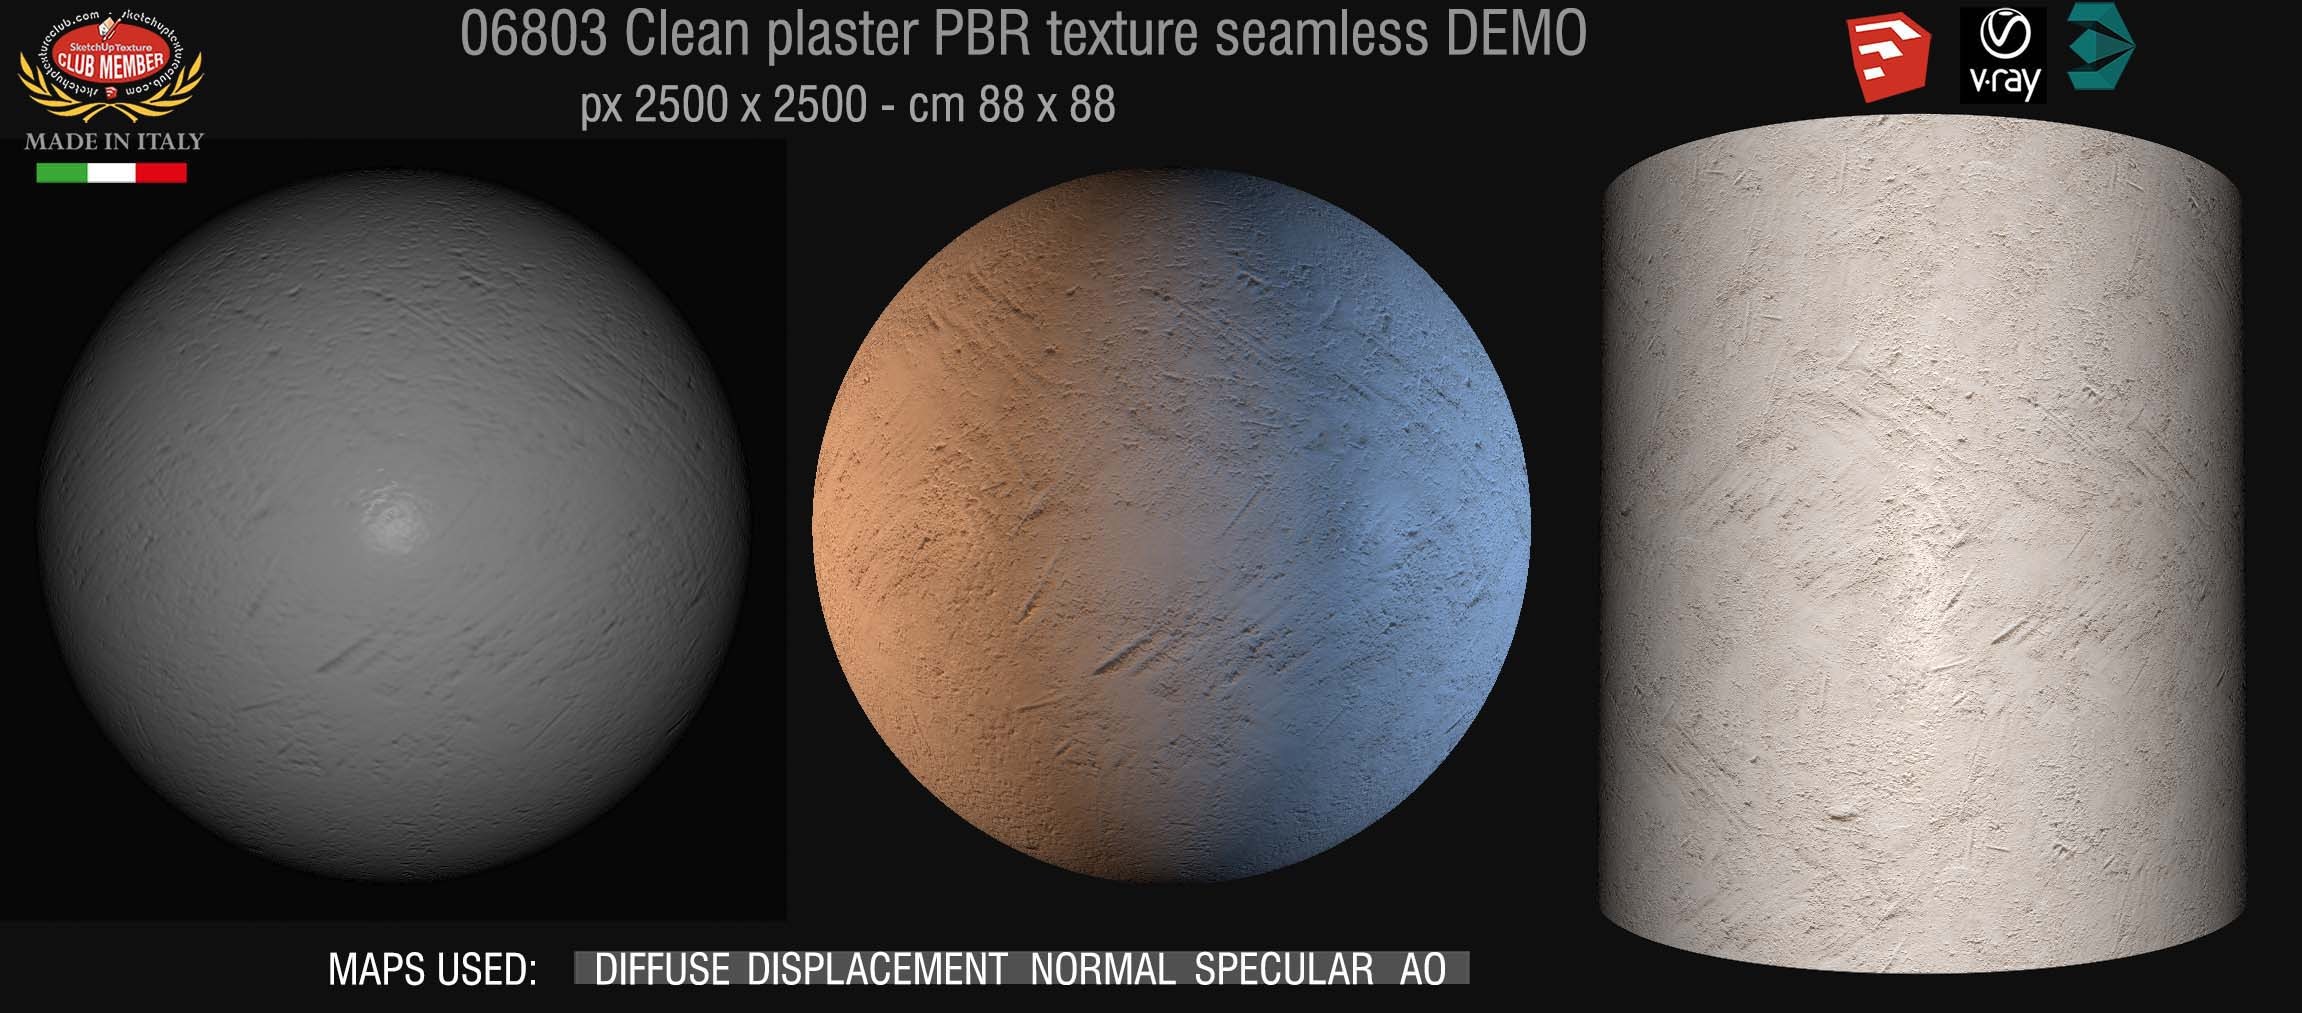 06803 clean plaster PBR texture seamless DEMO